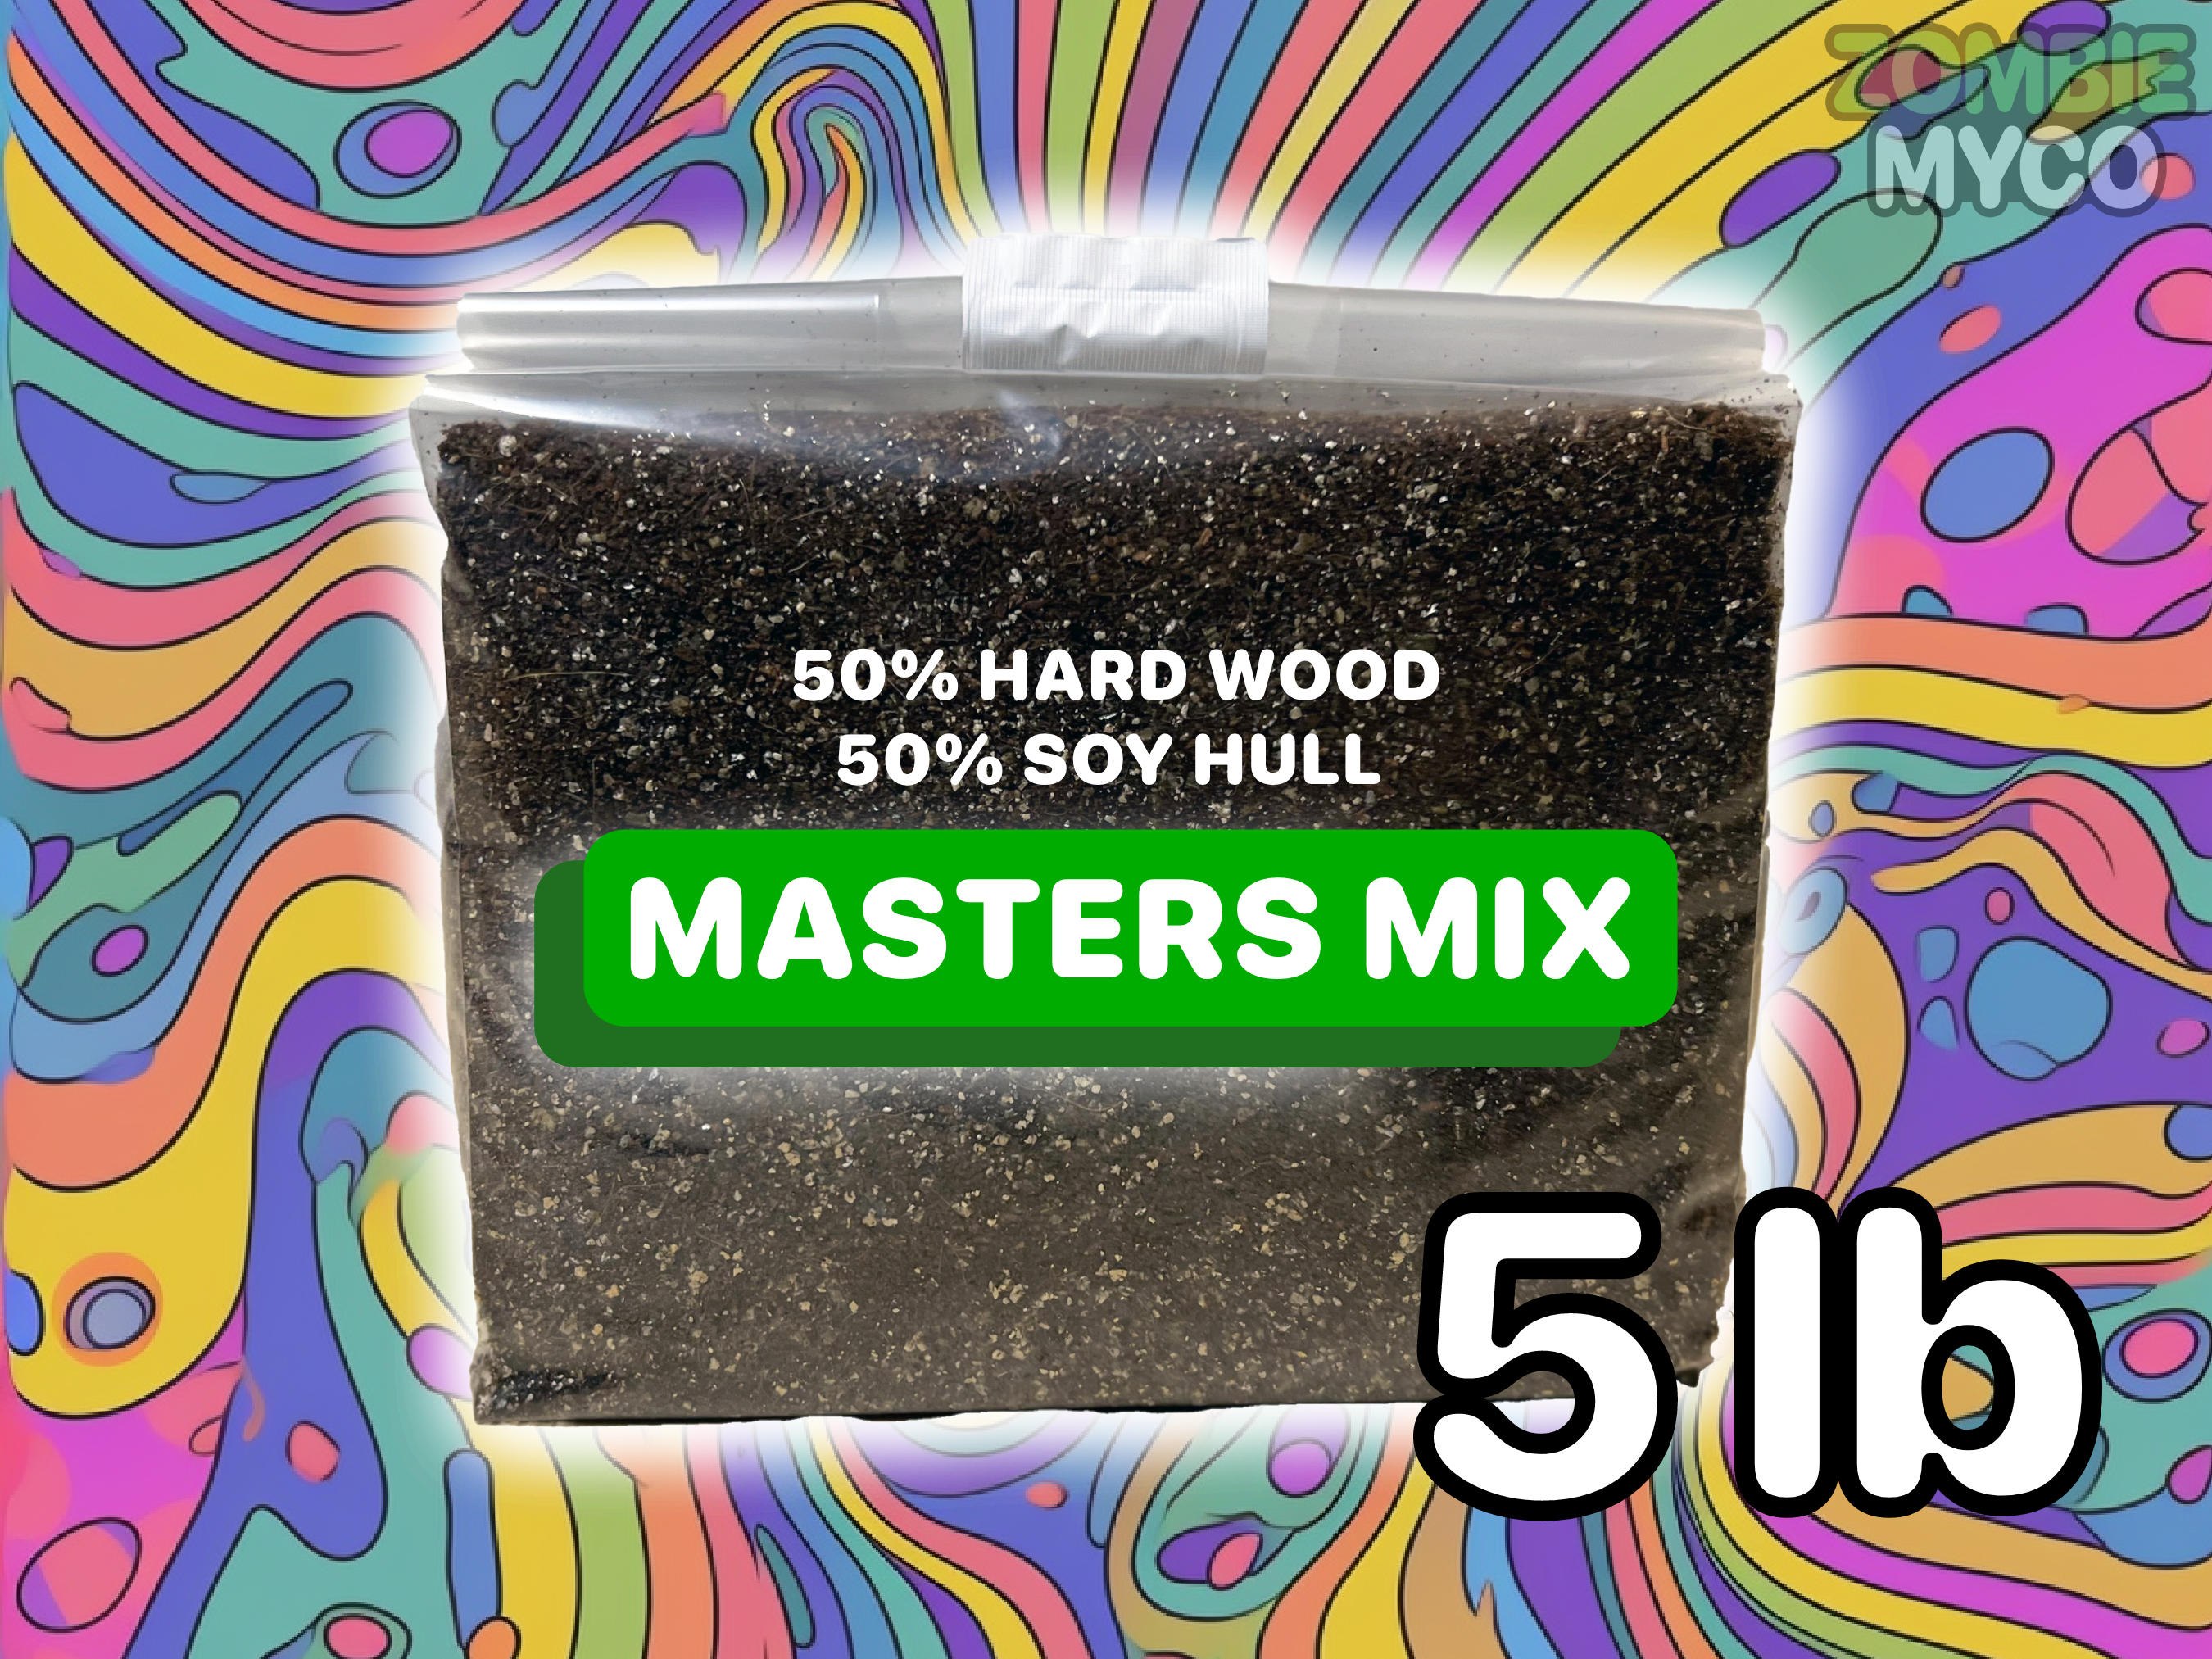 A SAMPLE OF Masters Mix Mushroom Substrate - Hard Wood & Soy Hulls